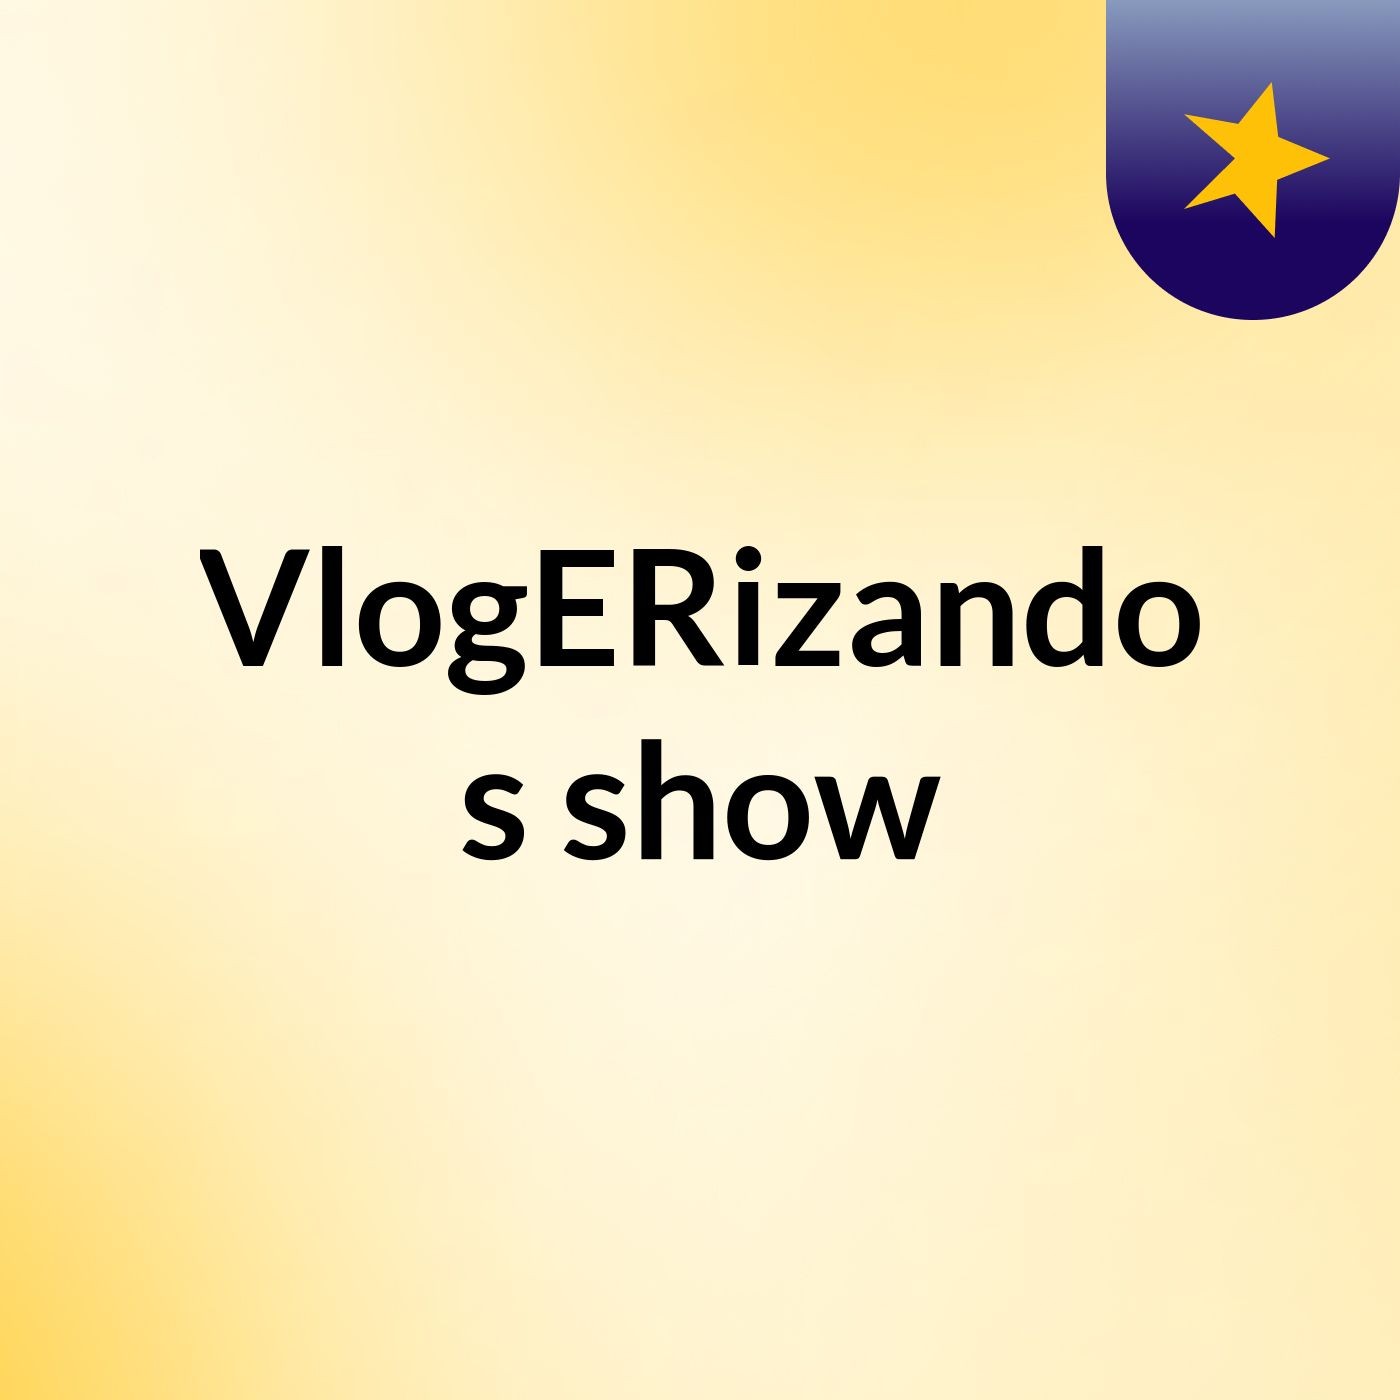 VlogERizando's show